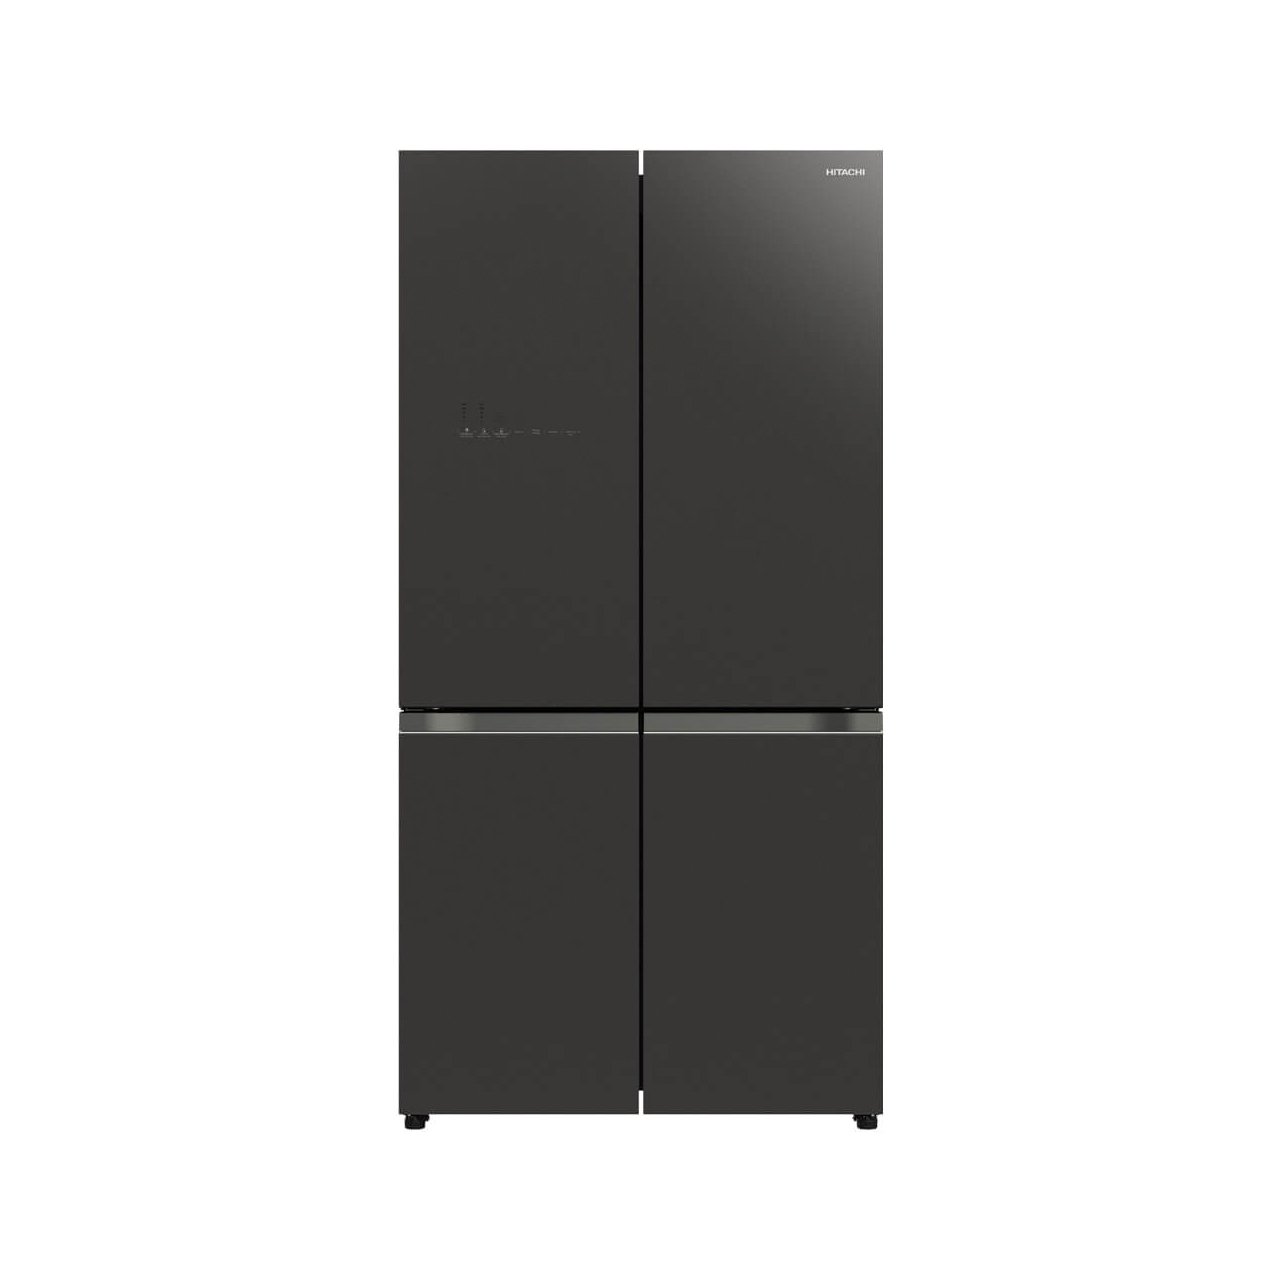 Hitachi French Bottom Freezer 4 Door Refrigerator - 720L